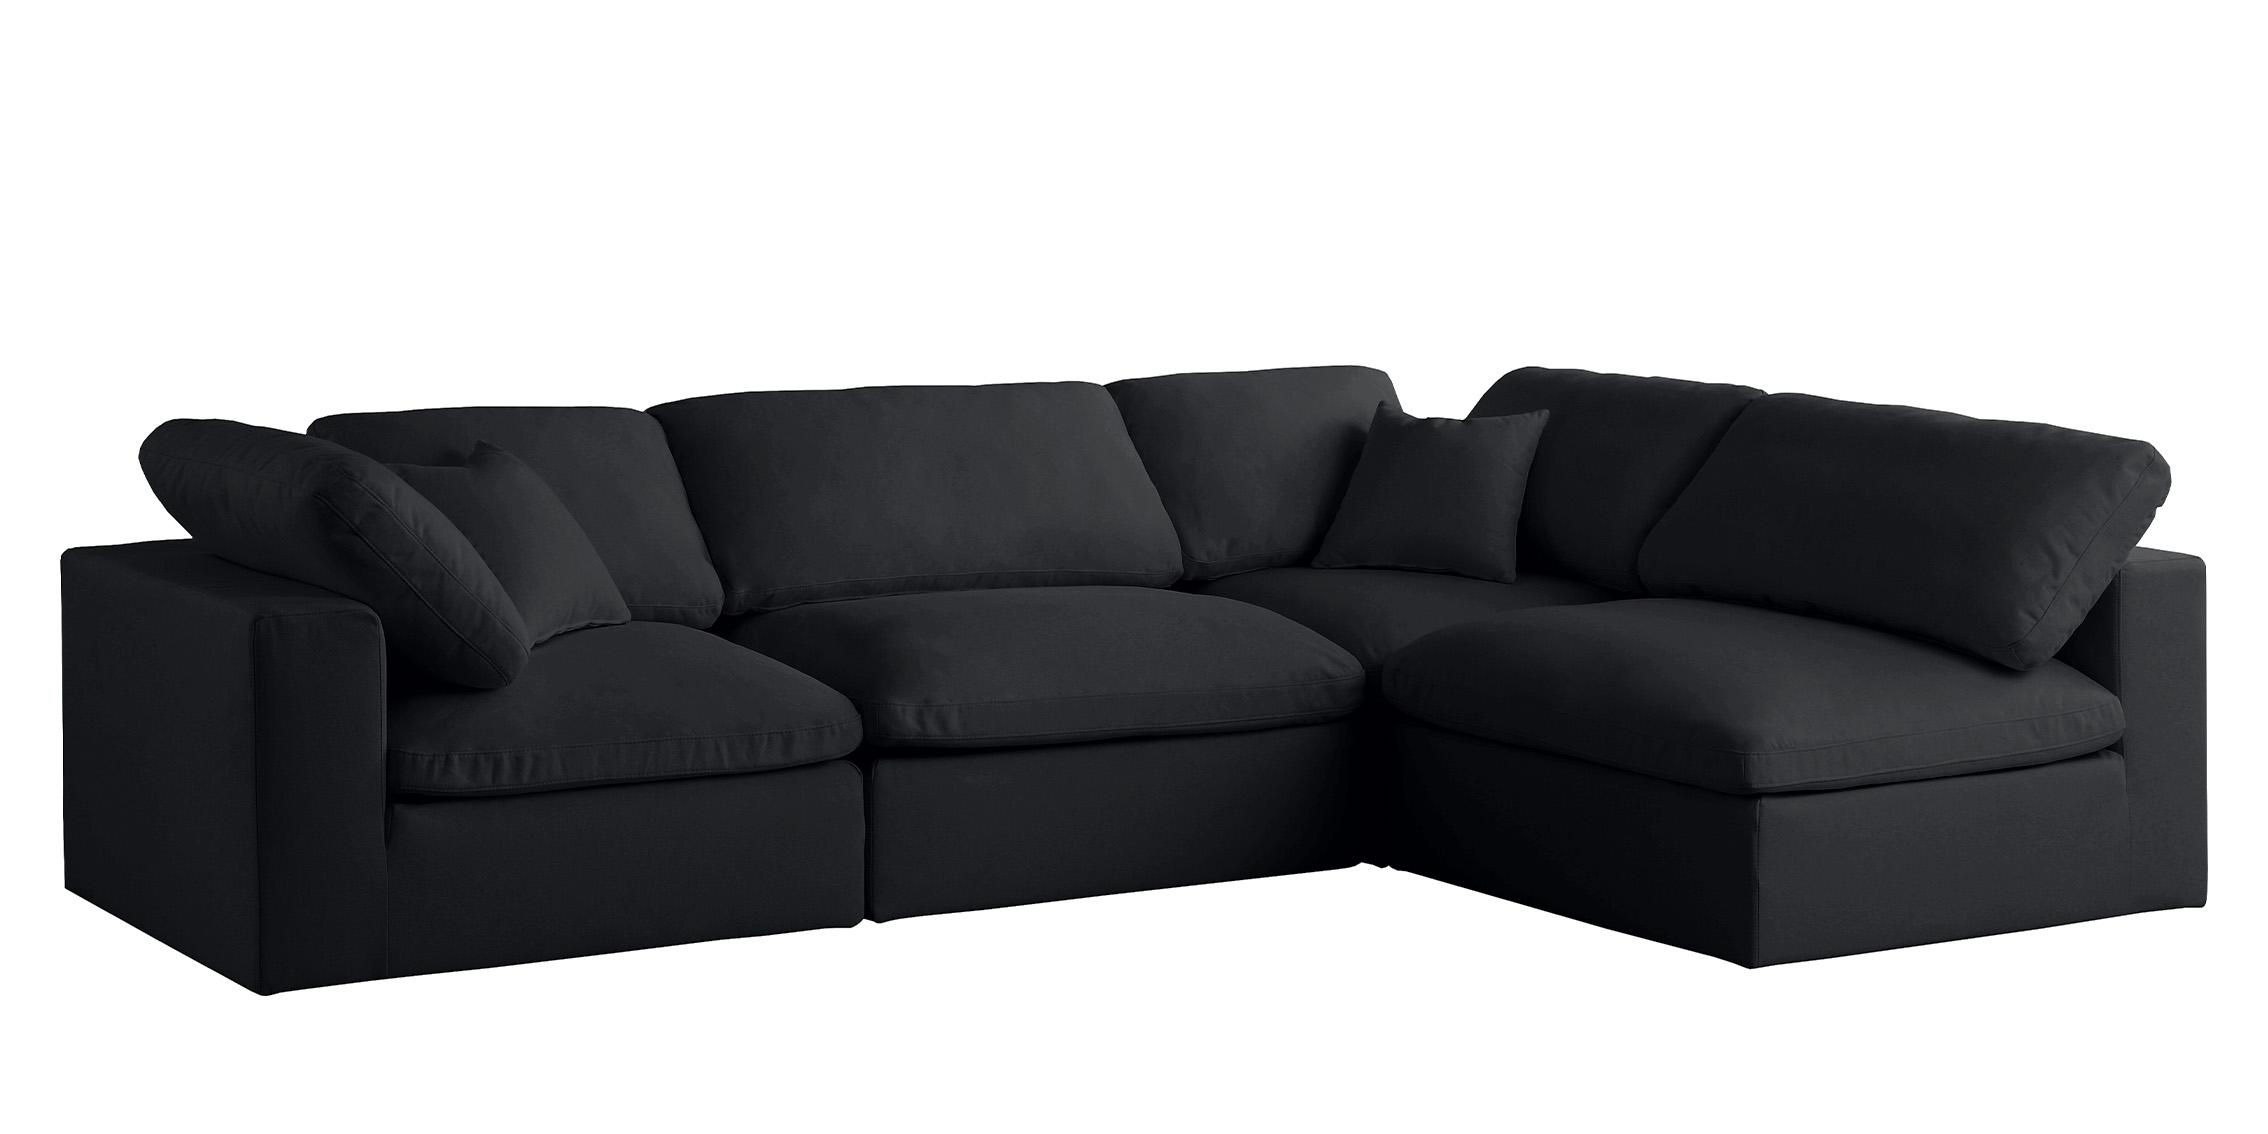 Contemporary, Modern Sectional Sofa 602Black-Sec4B 602Black-Sec4B in Black Fabric